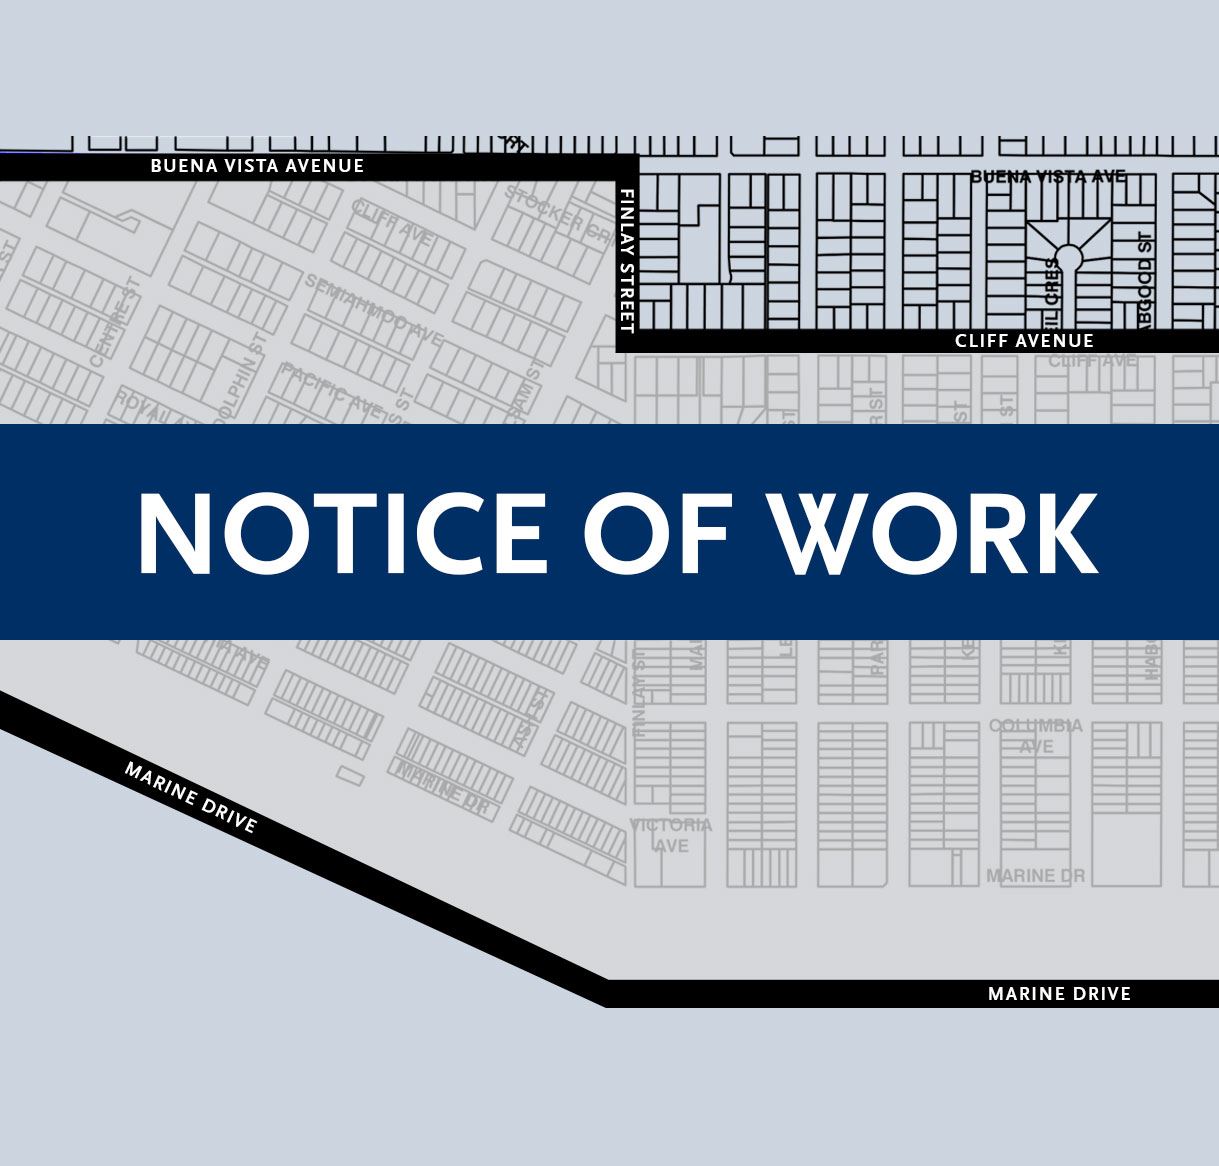 notice of work - sewer maintenance